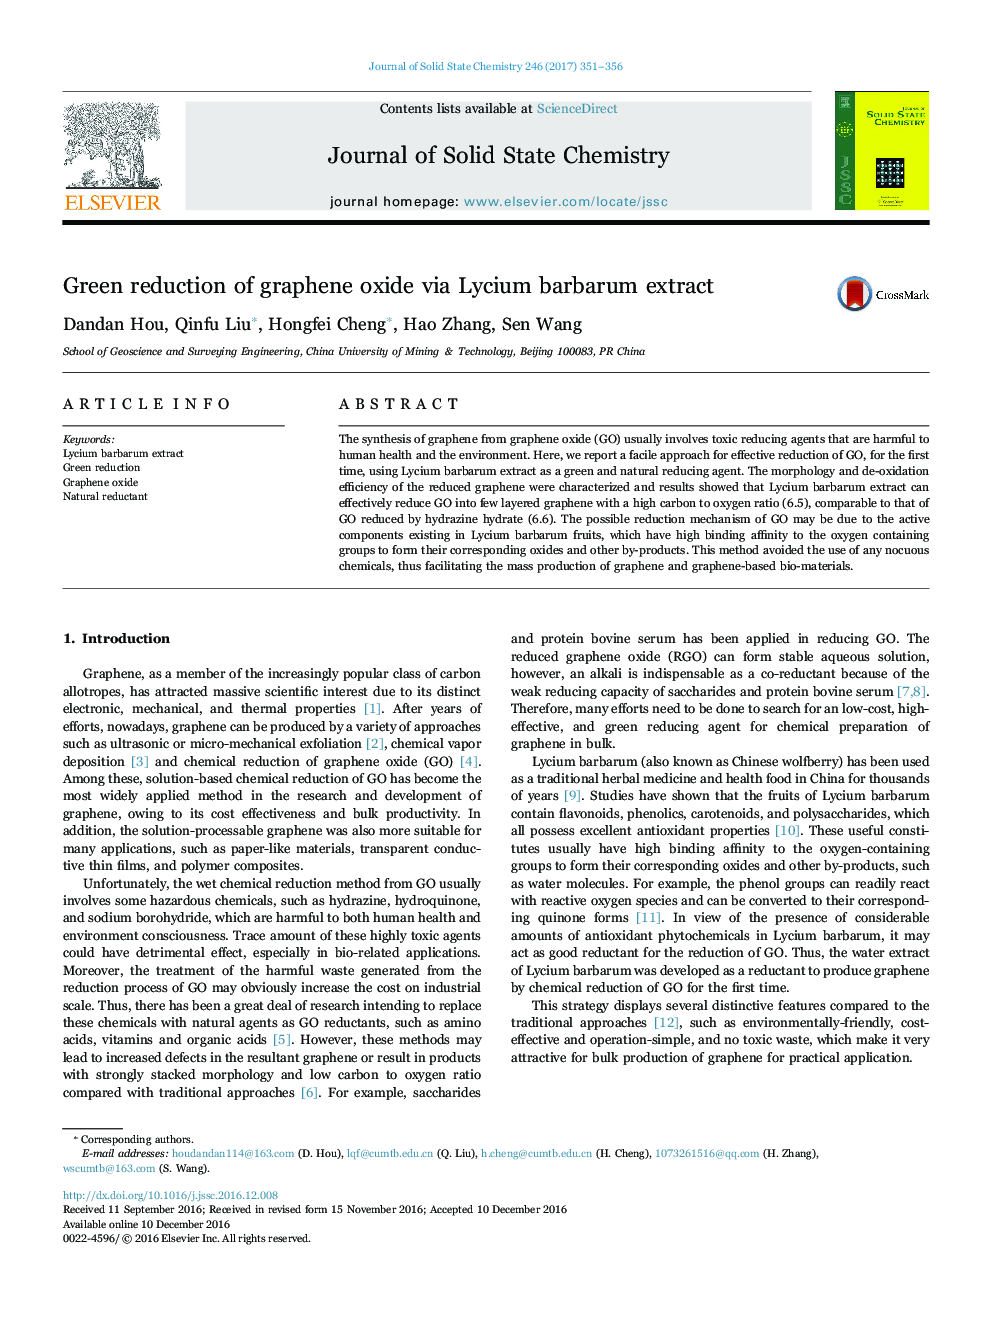 Green reduction of graphene oxide via Lycium barbarum extract